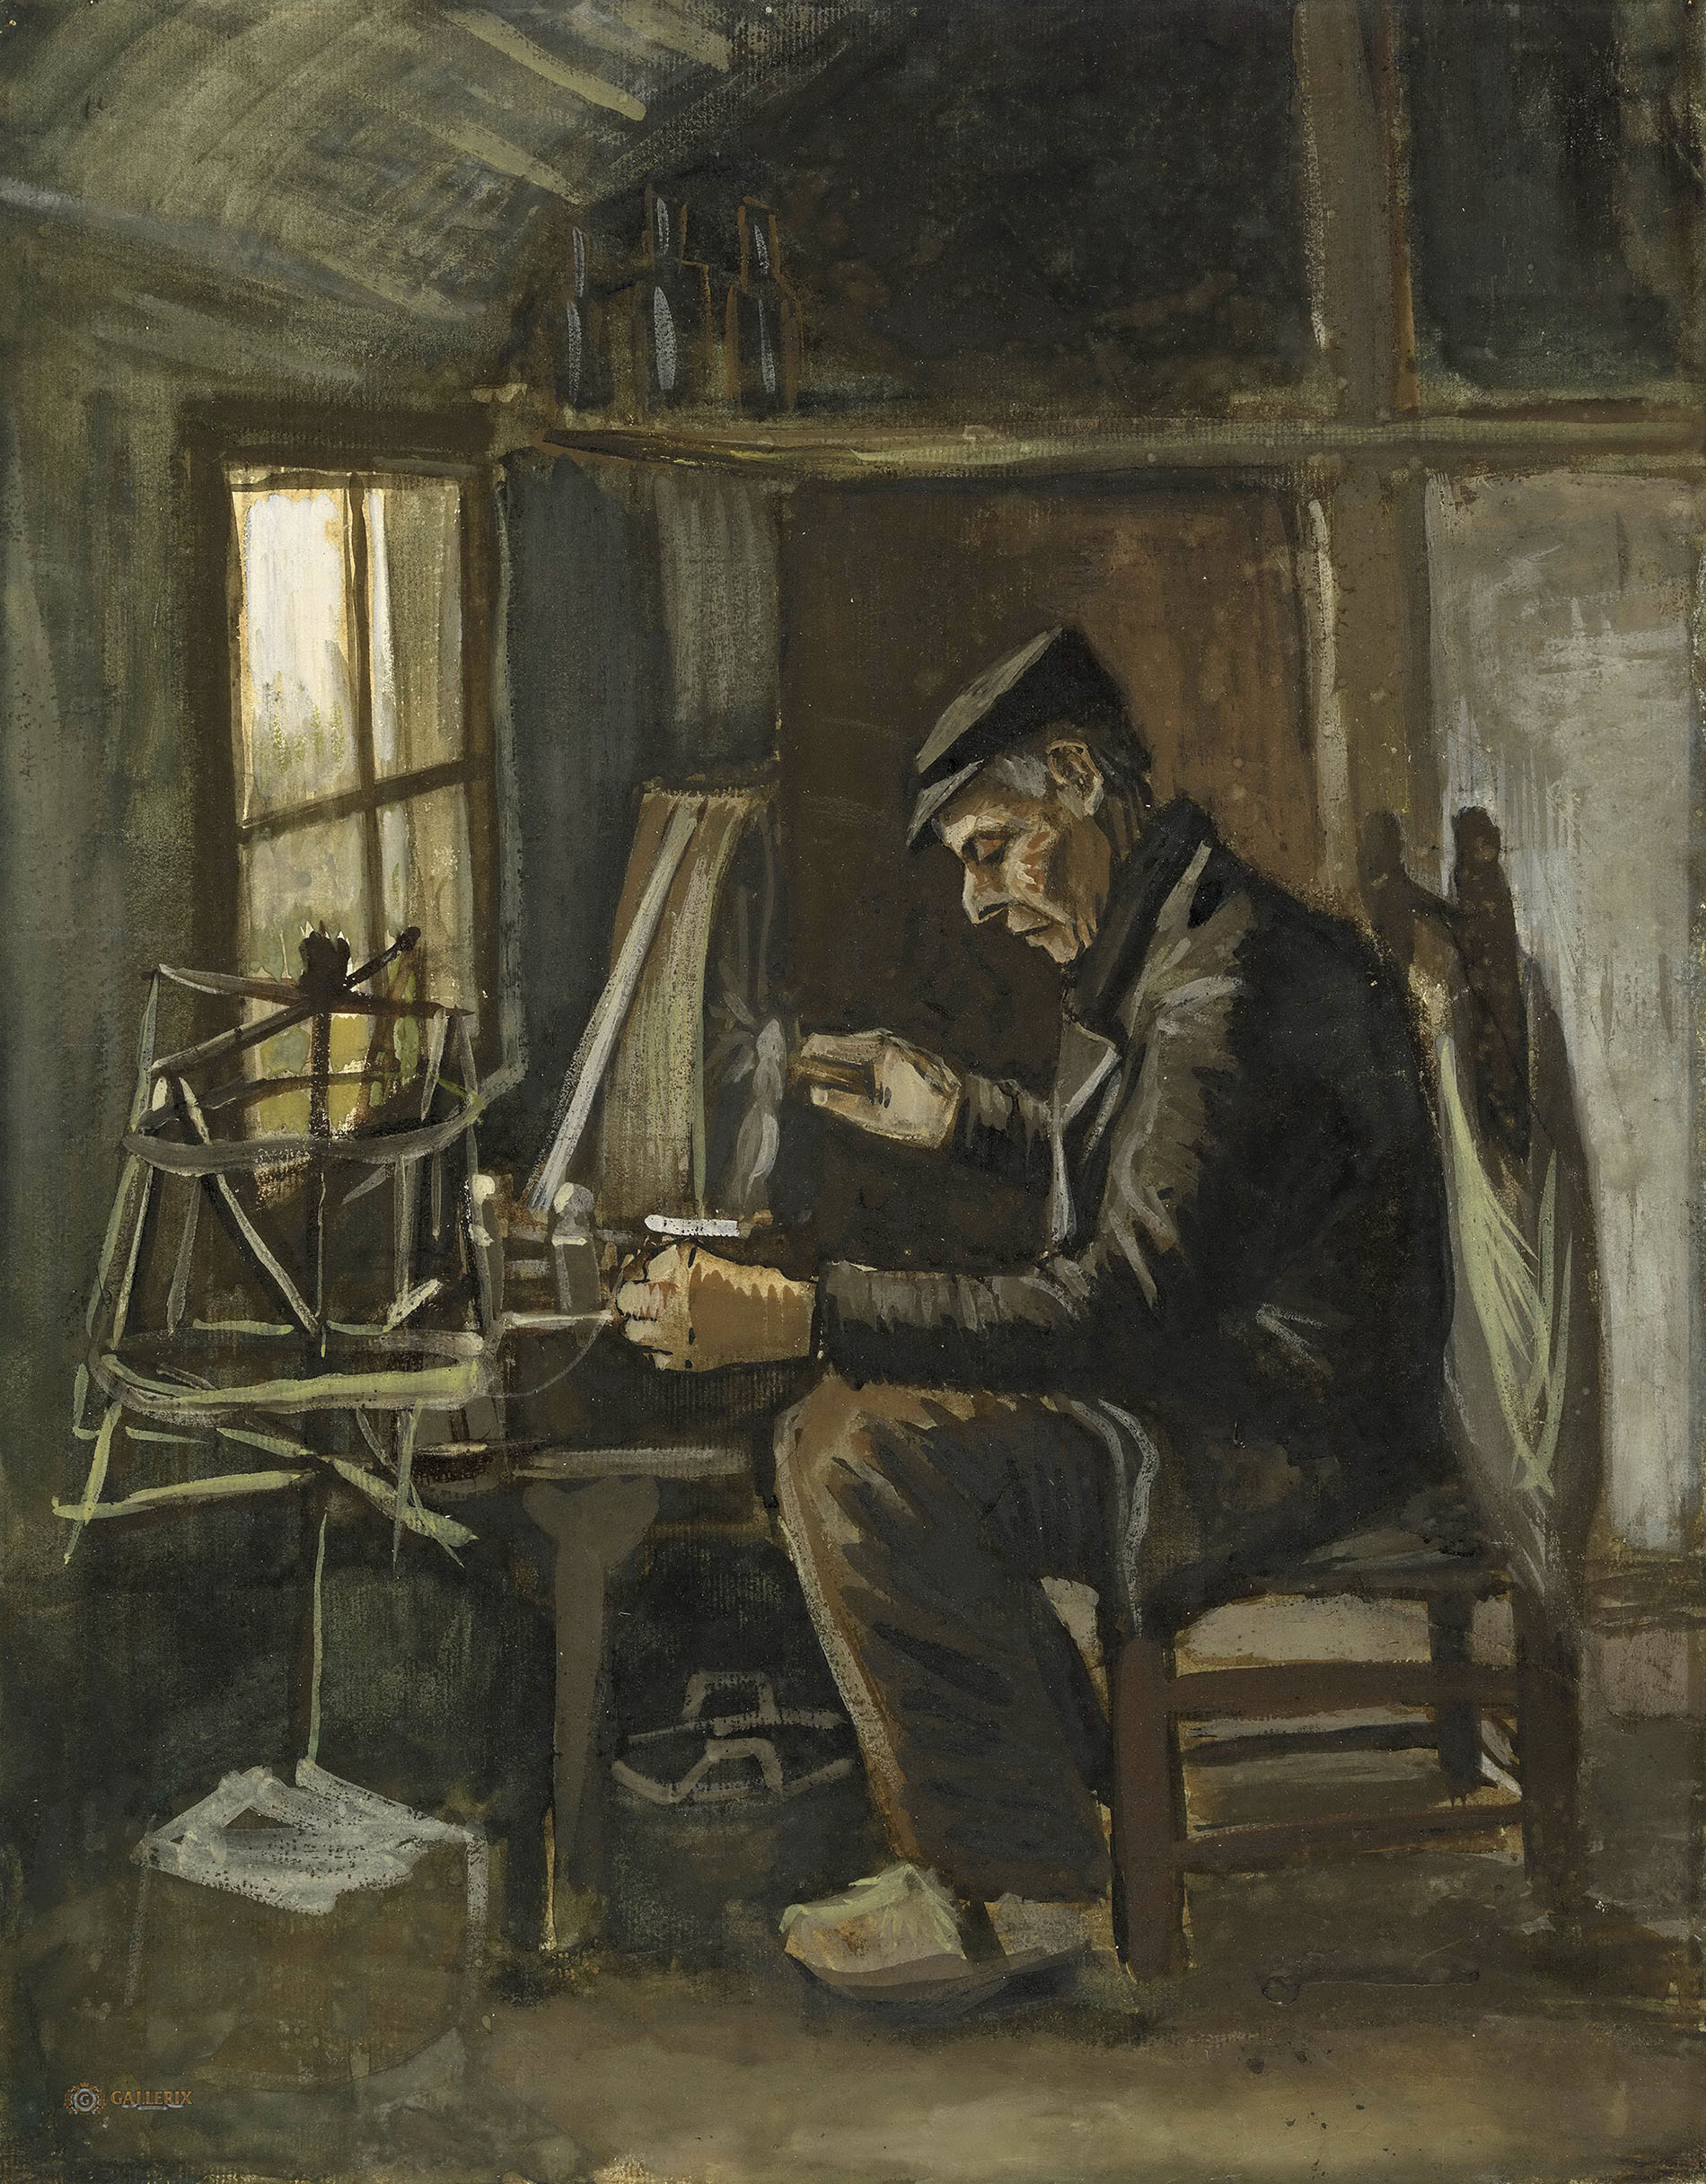 Винсент Ван Гог. "Мужчина, наматывающий пряжу". 1884. Музей Ван Гога, Амстердам.